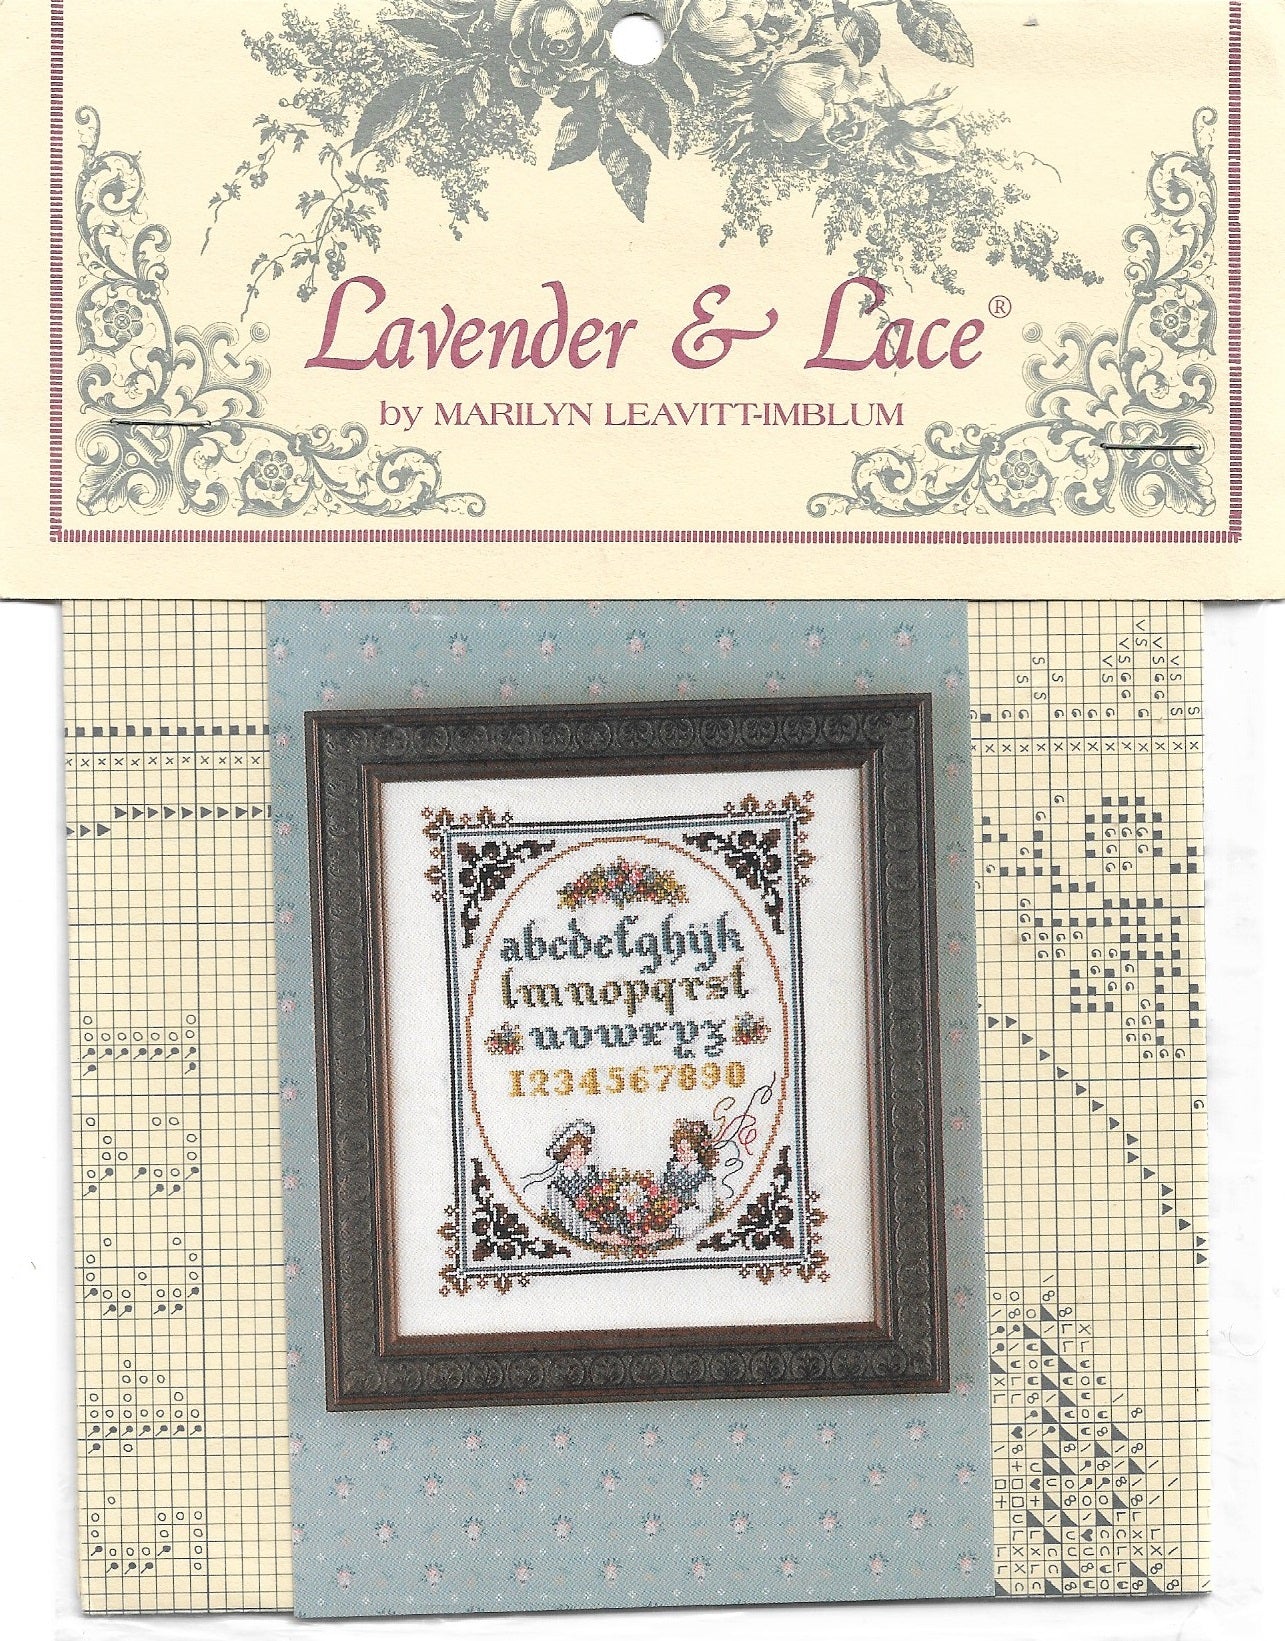 Lavender & Lace Serendipity cross stitch pattern